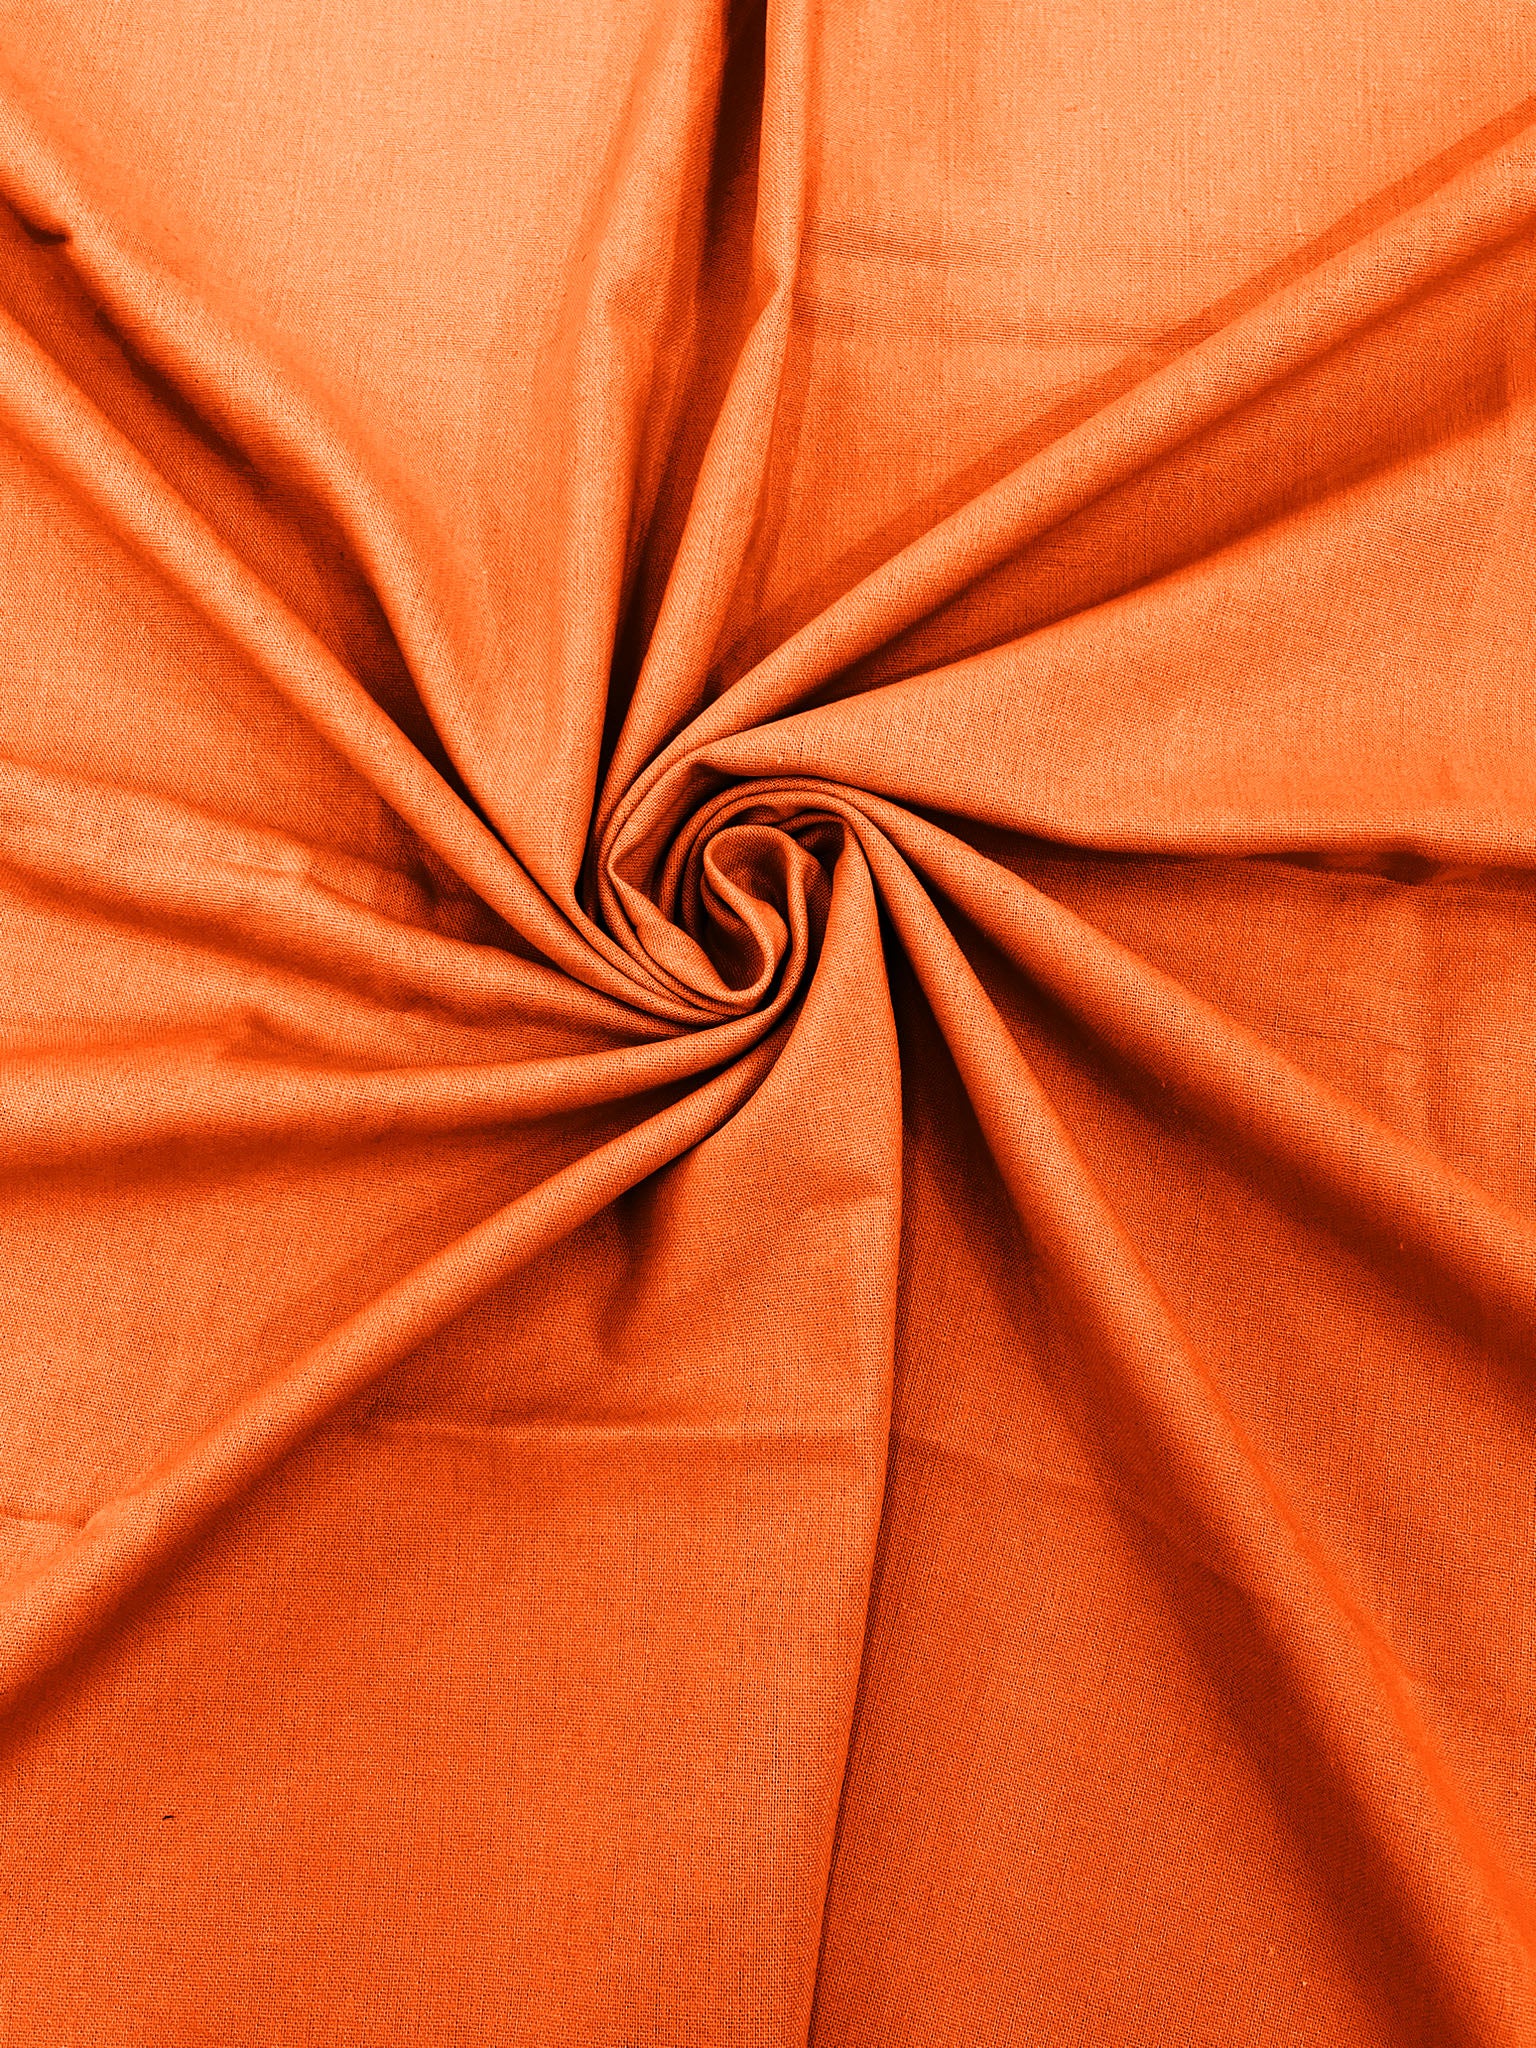 Orange Medium Weight Natural Linen Fabric/50 " Wide/Clothing